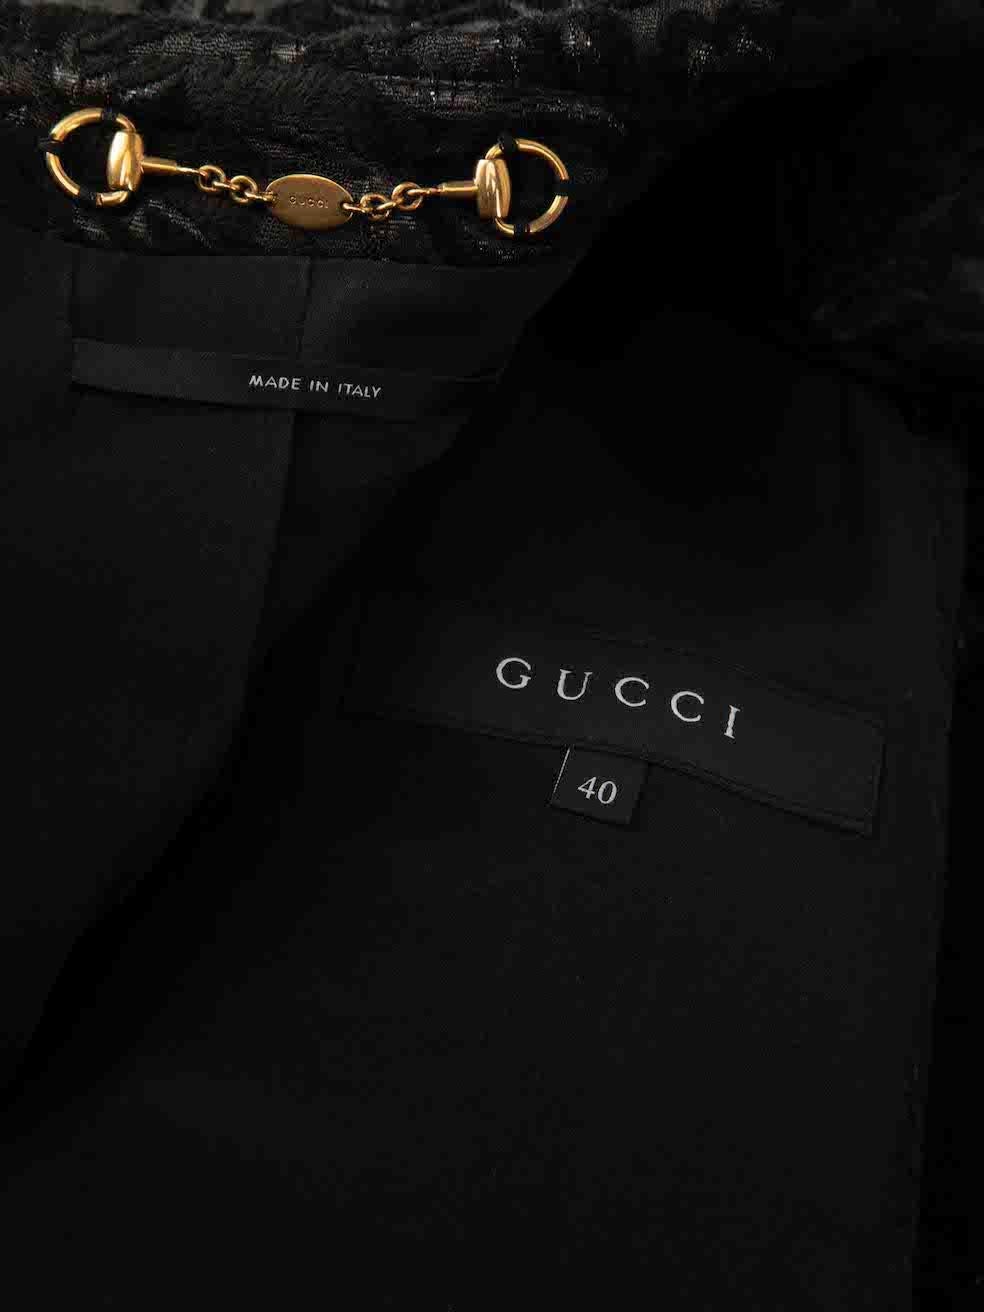 Gucci Black Floral Jacquard Blazer Jacket Size S For Sale 1